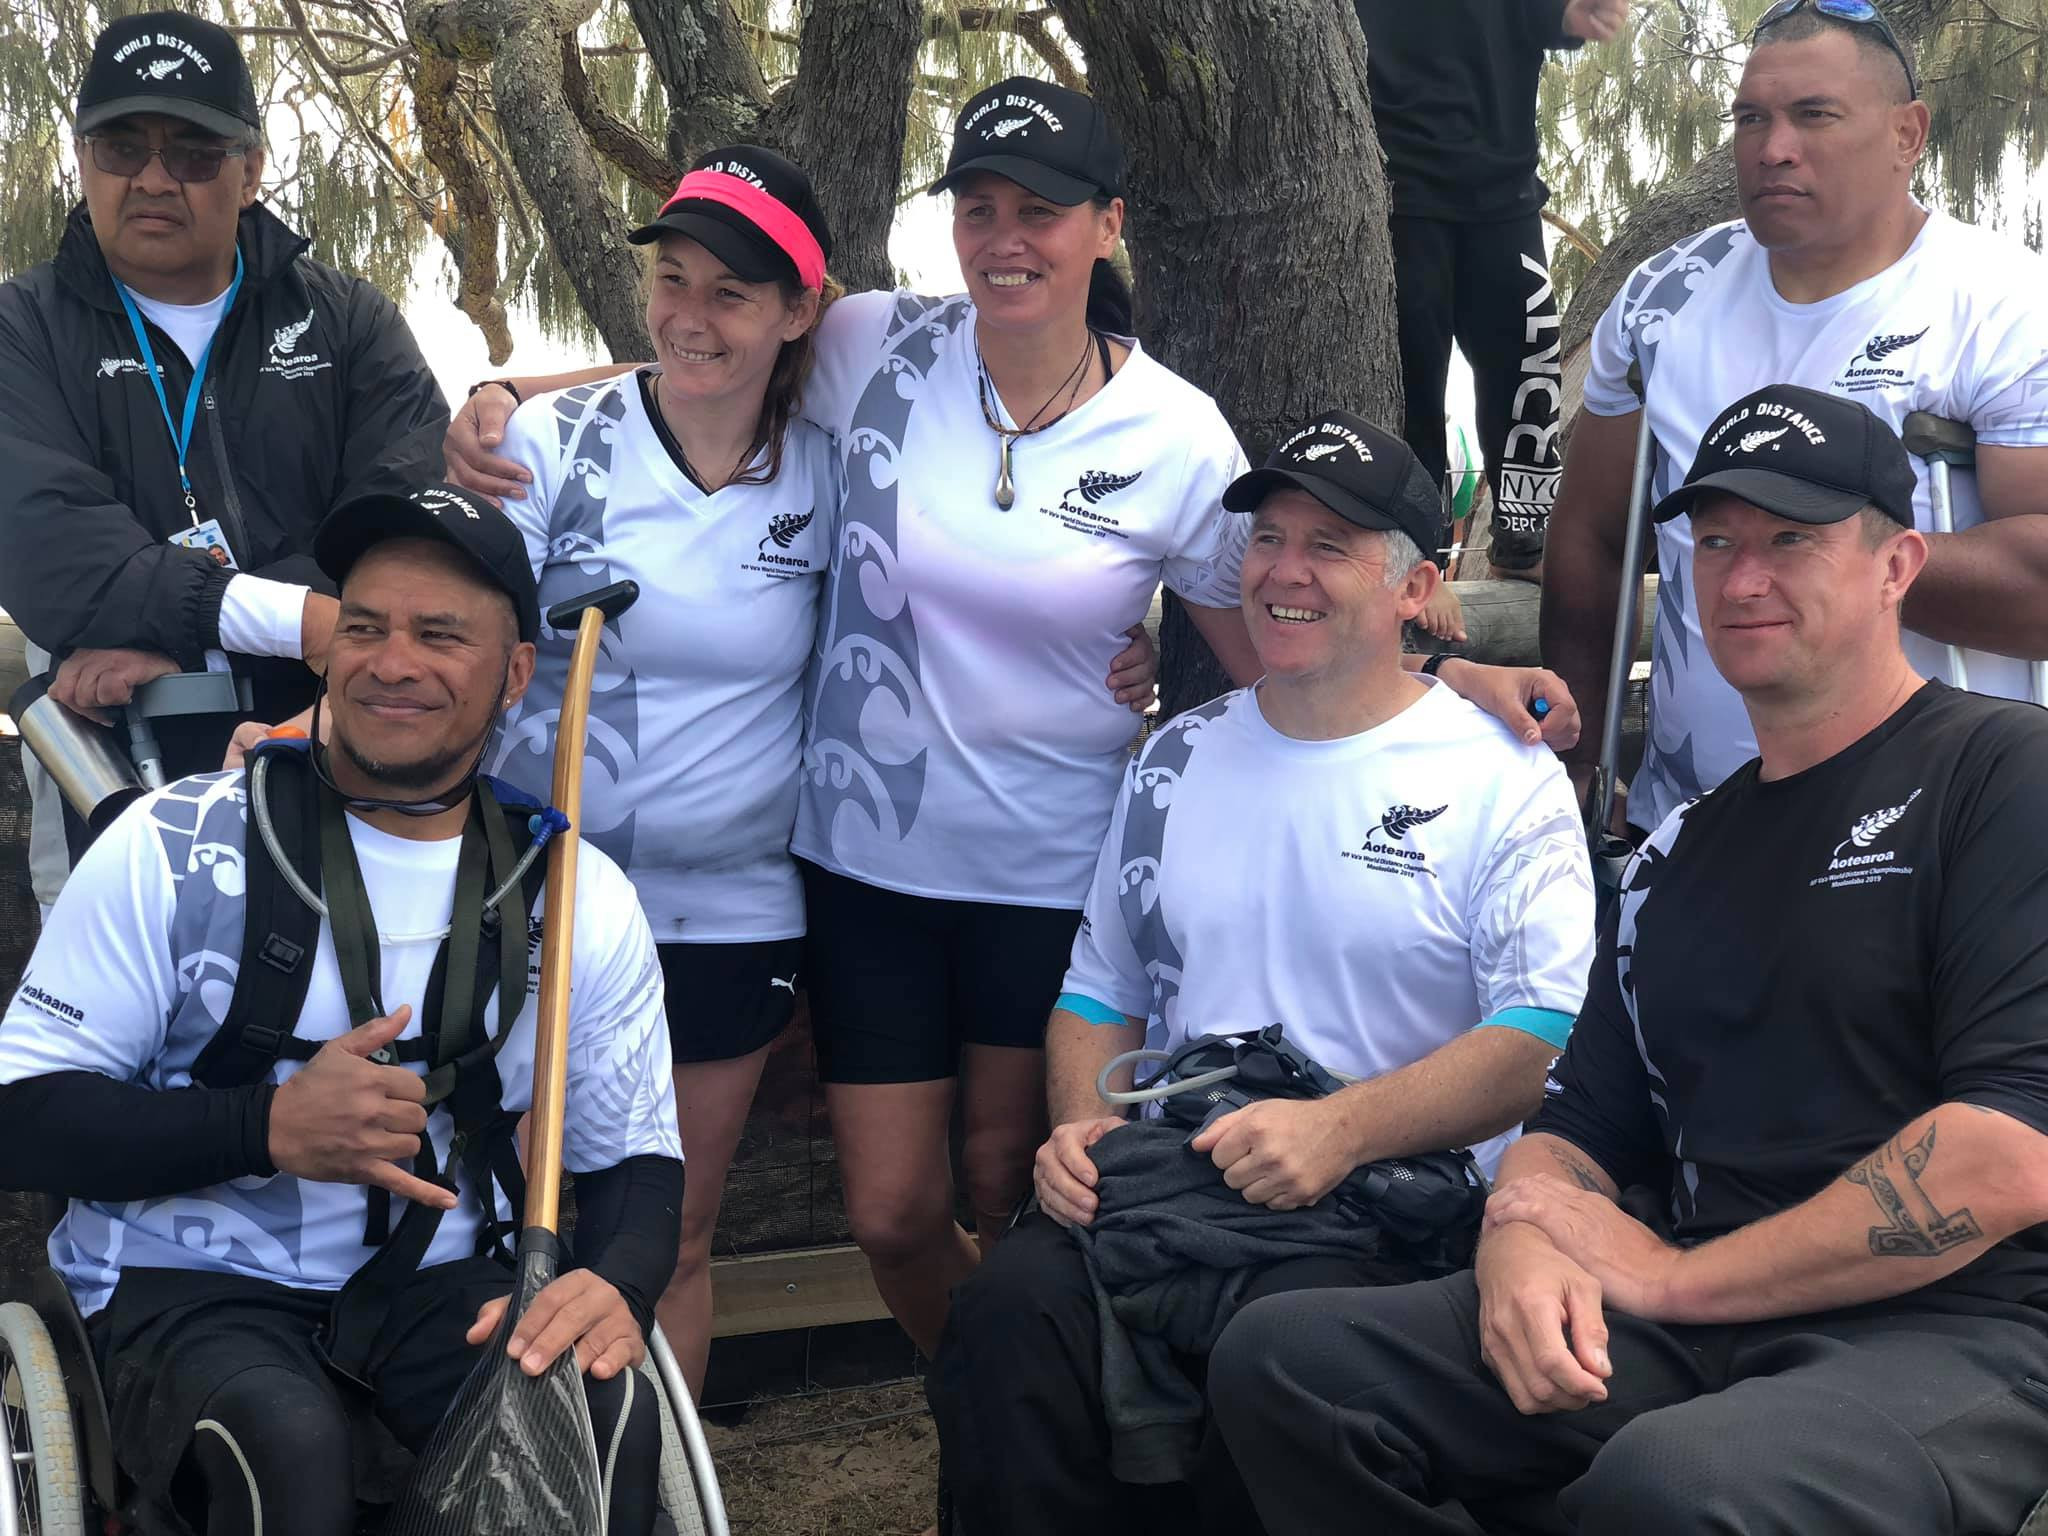 World Distance Championships 2019 – Aotearoa New Zealand Campaign Wrap-up